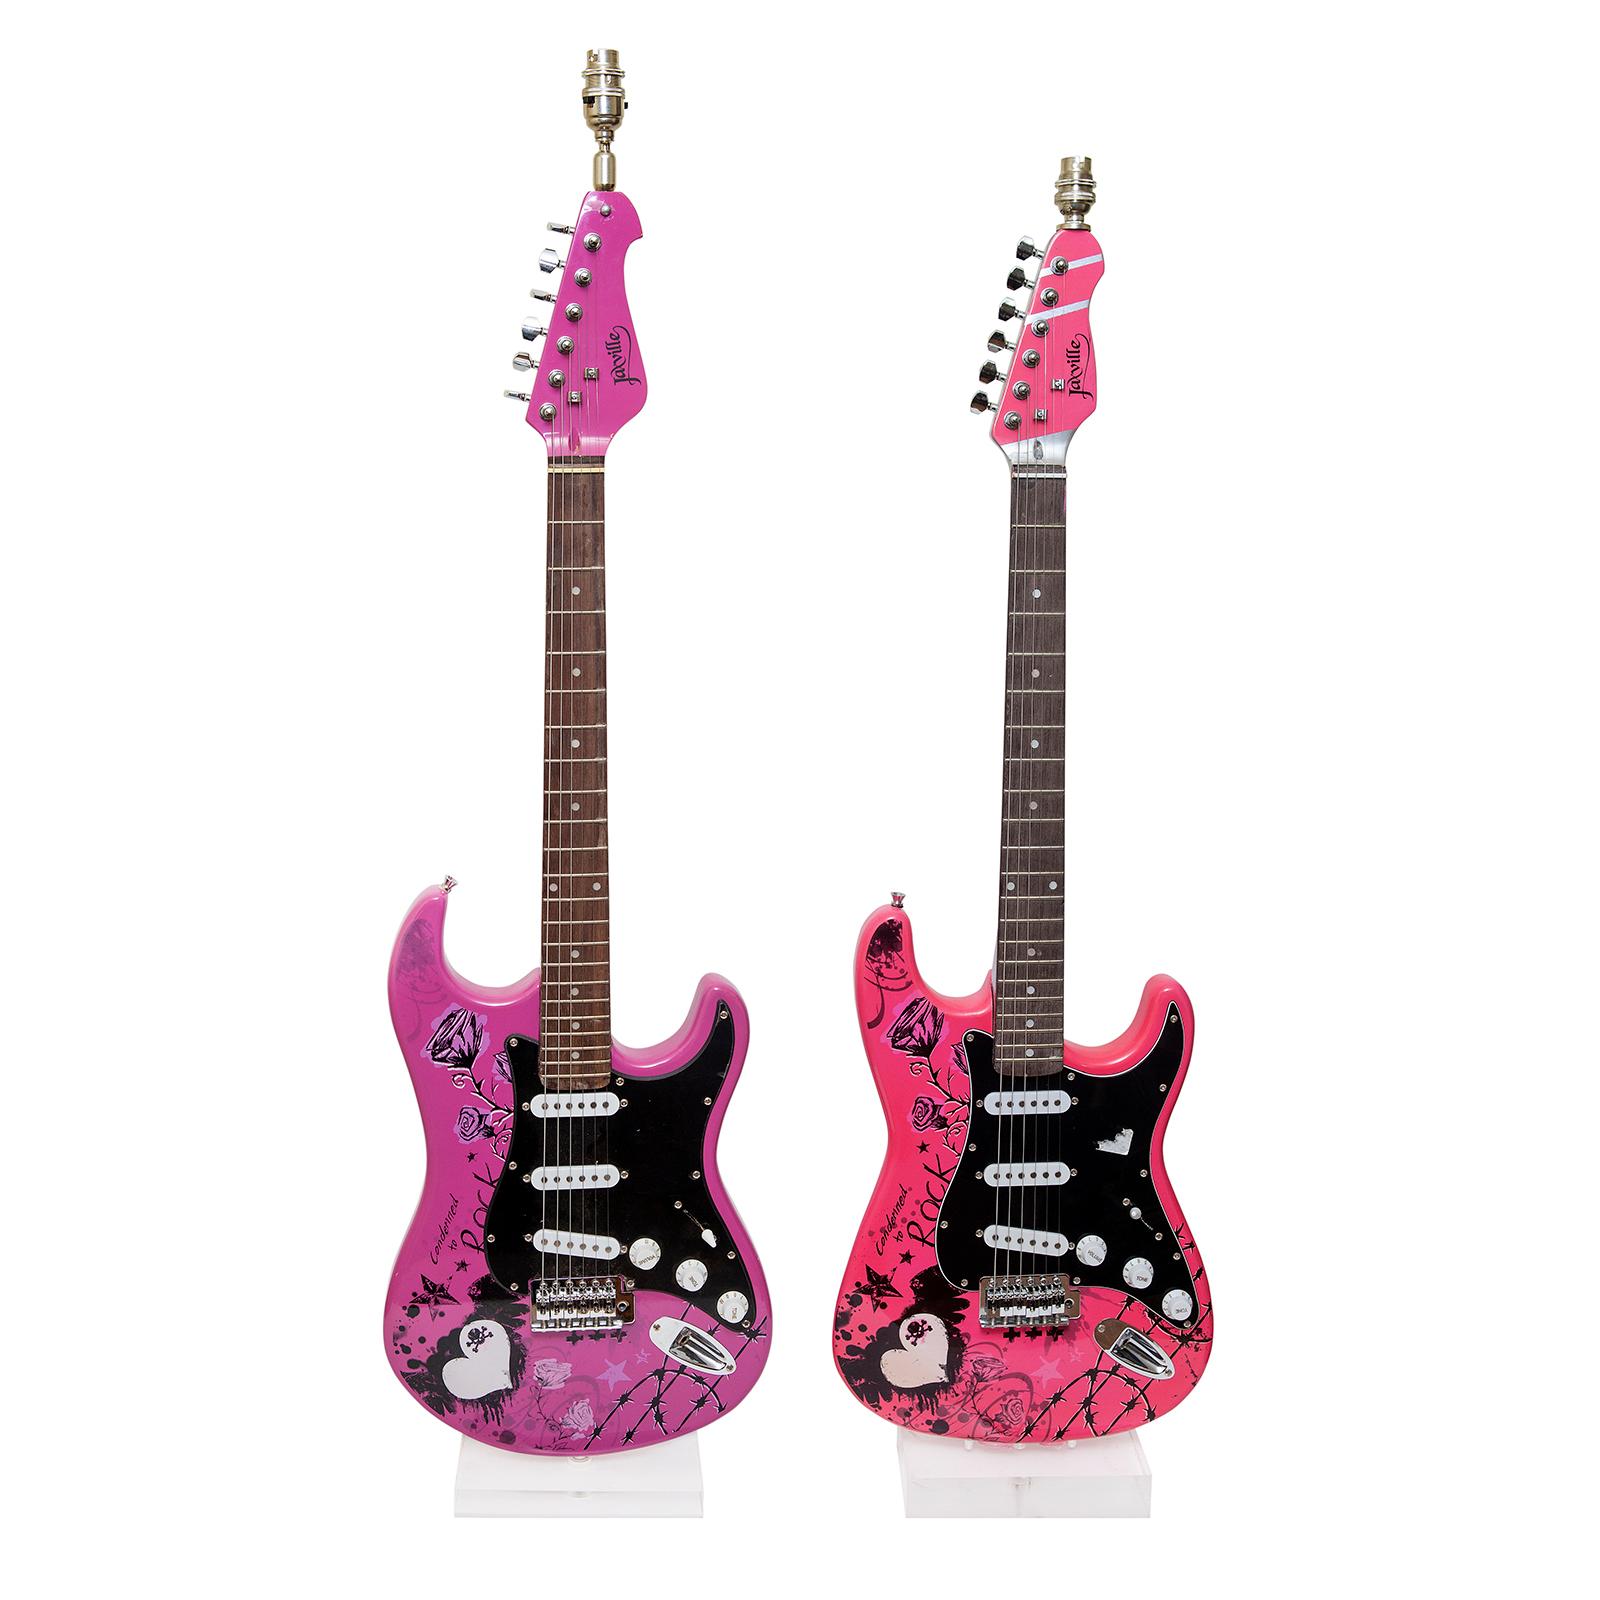 Bois Lampe Guitar Electric Punk Bubble Gum Pink Condemned to Rock & Roll Chrome Maple en vente